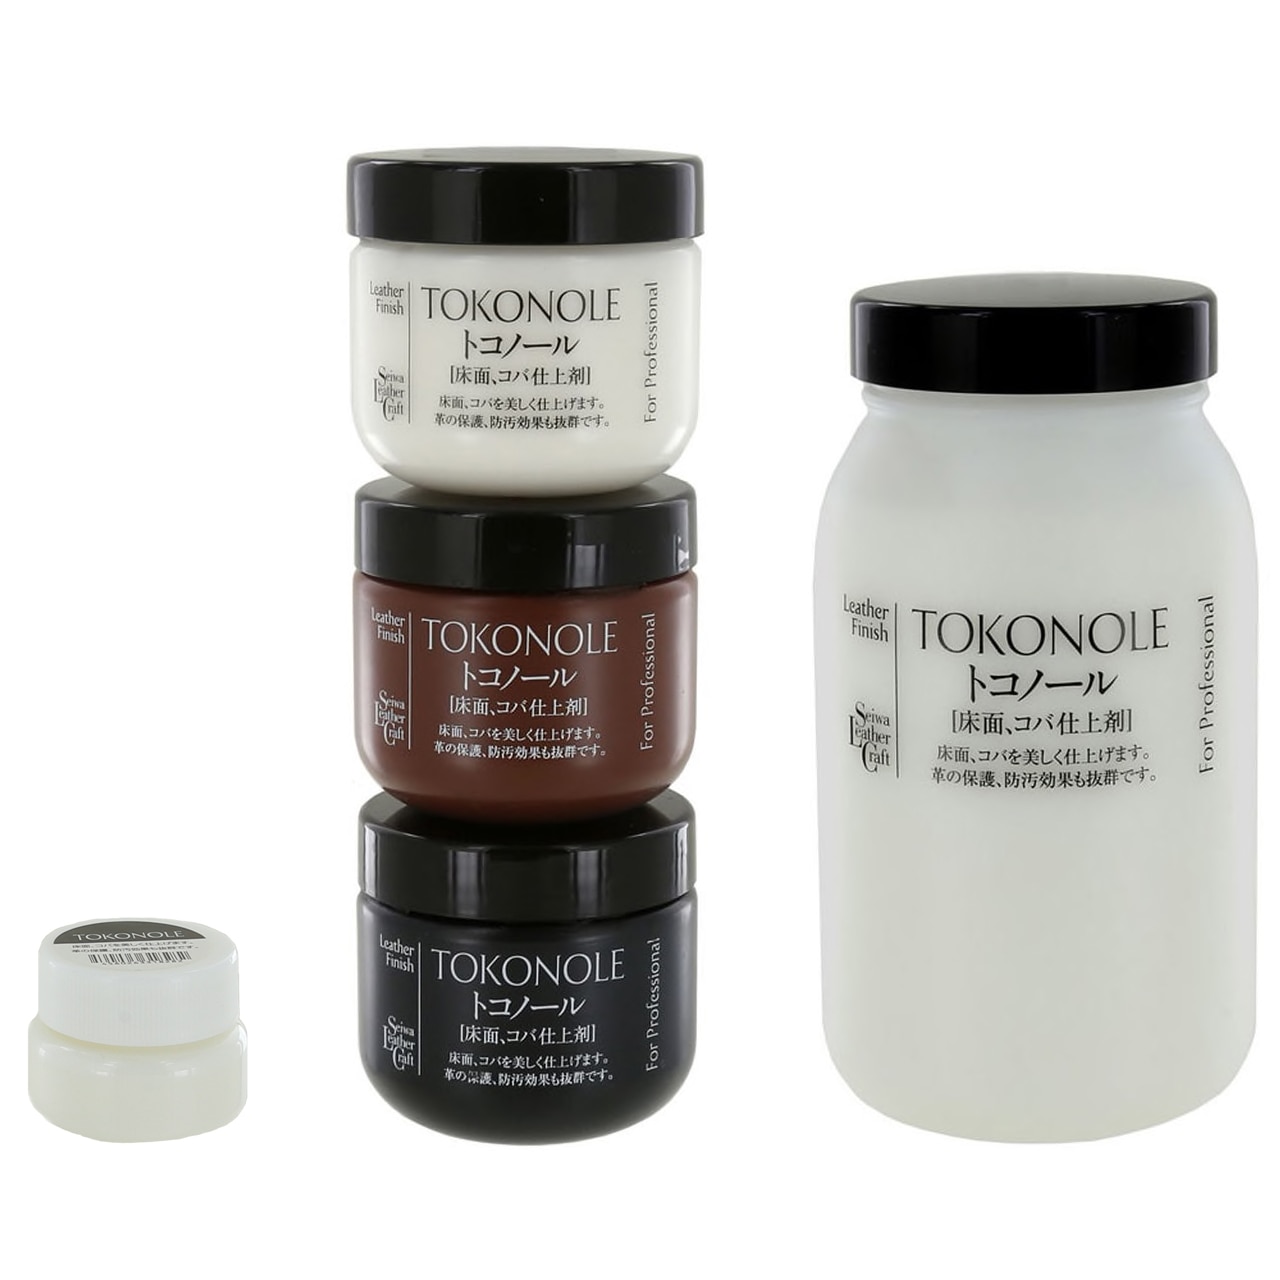 Tokonole - Edge treatment 